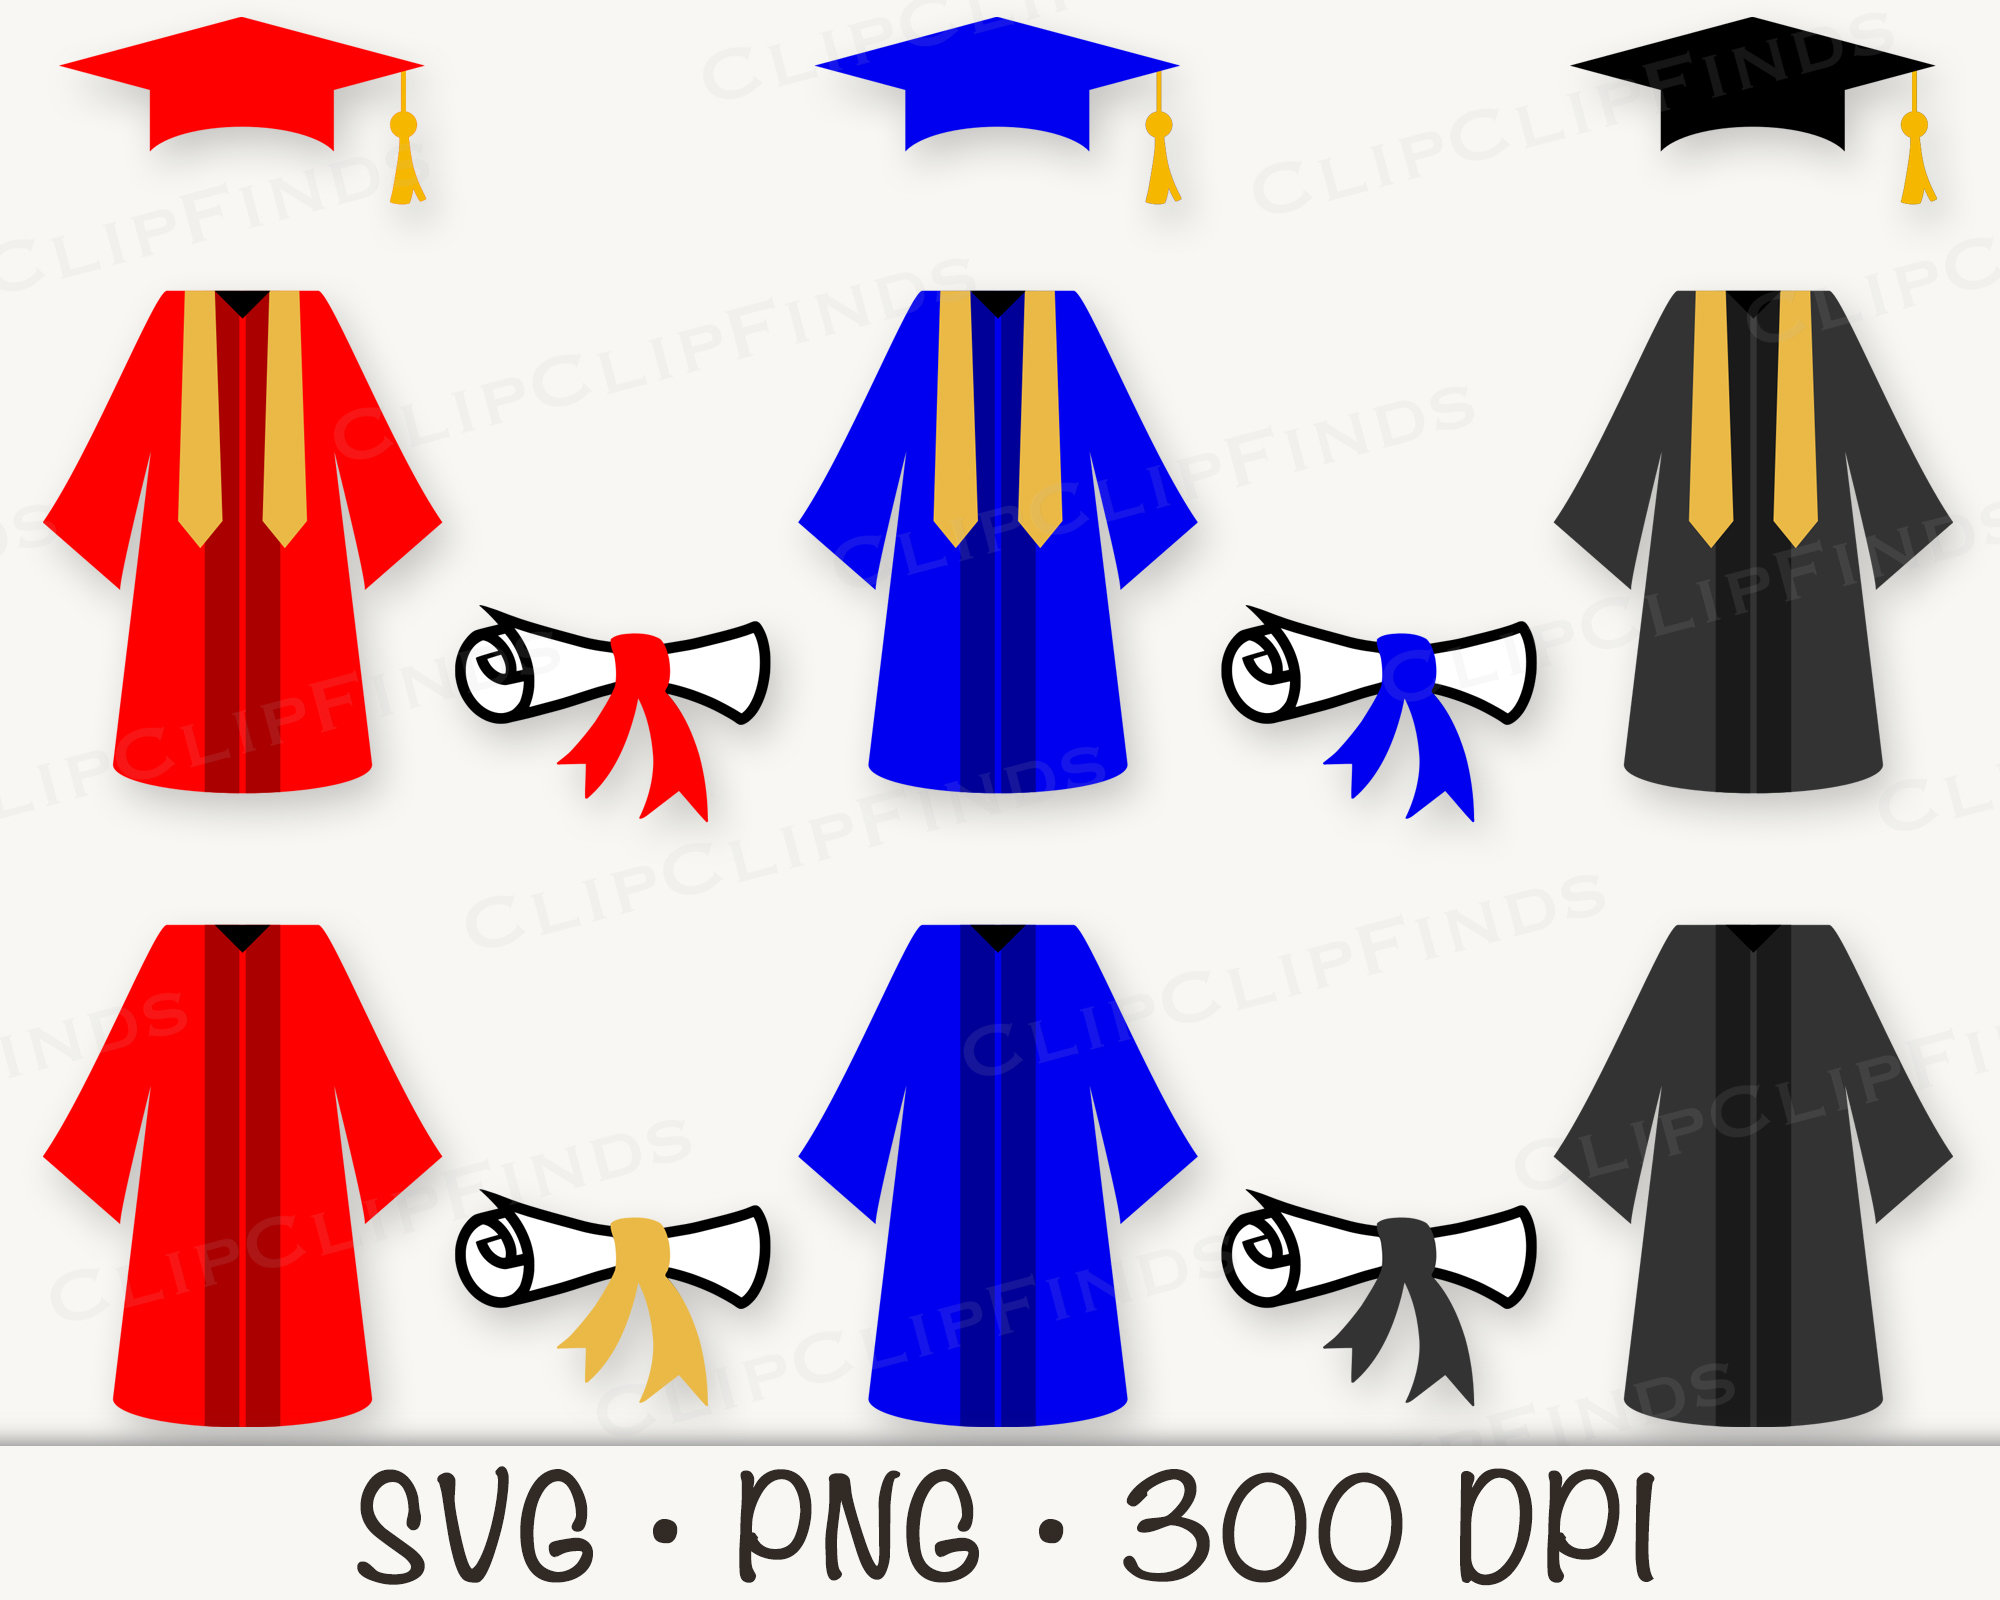 Pink Graduation Cap Shield Icon Isolated Stock Illustration 2303659885 |  Shutterstock